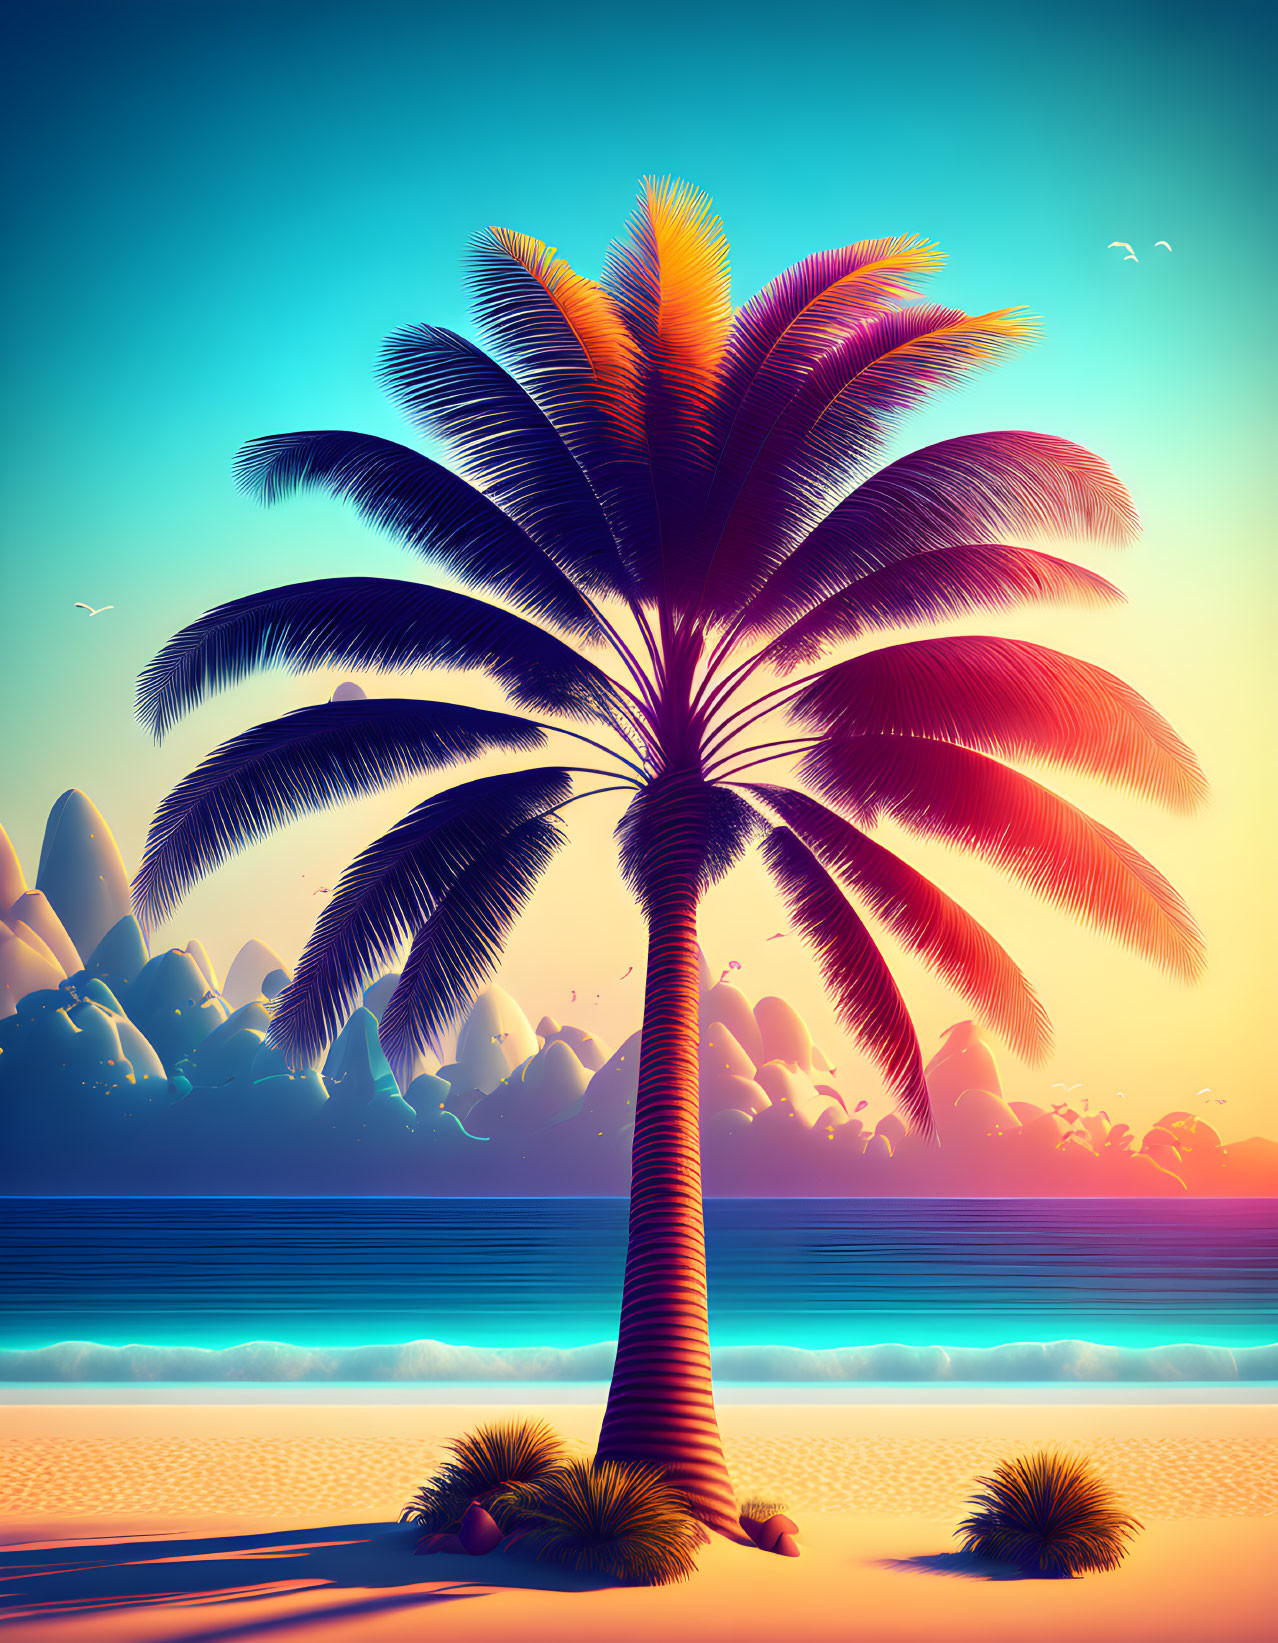 Tropical Beach Scene with Palm Tree, Sunset Sky, Ocean, and Birds